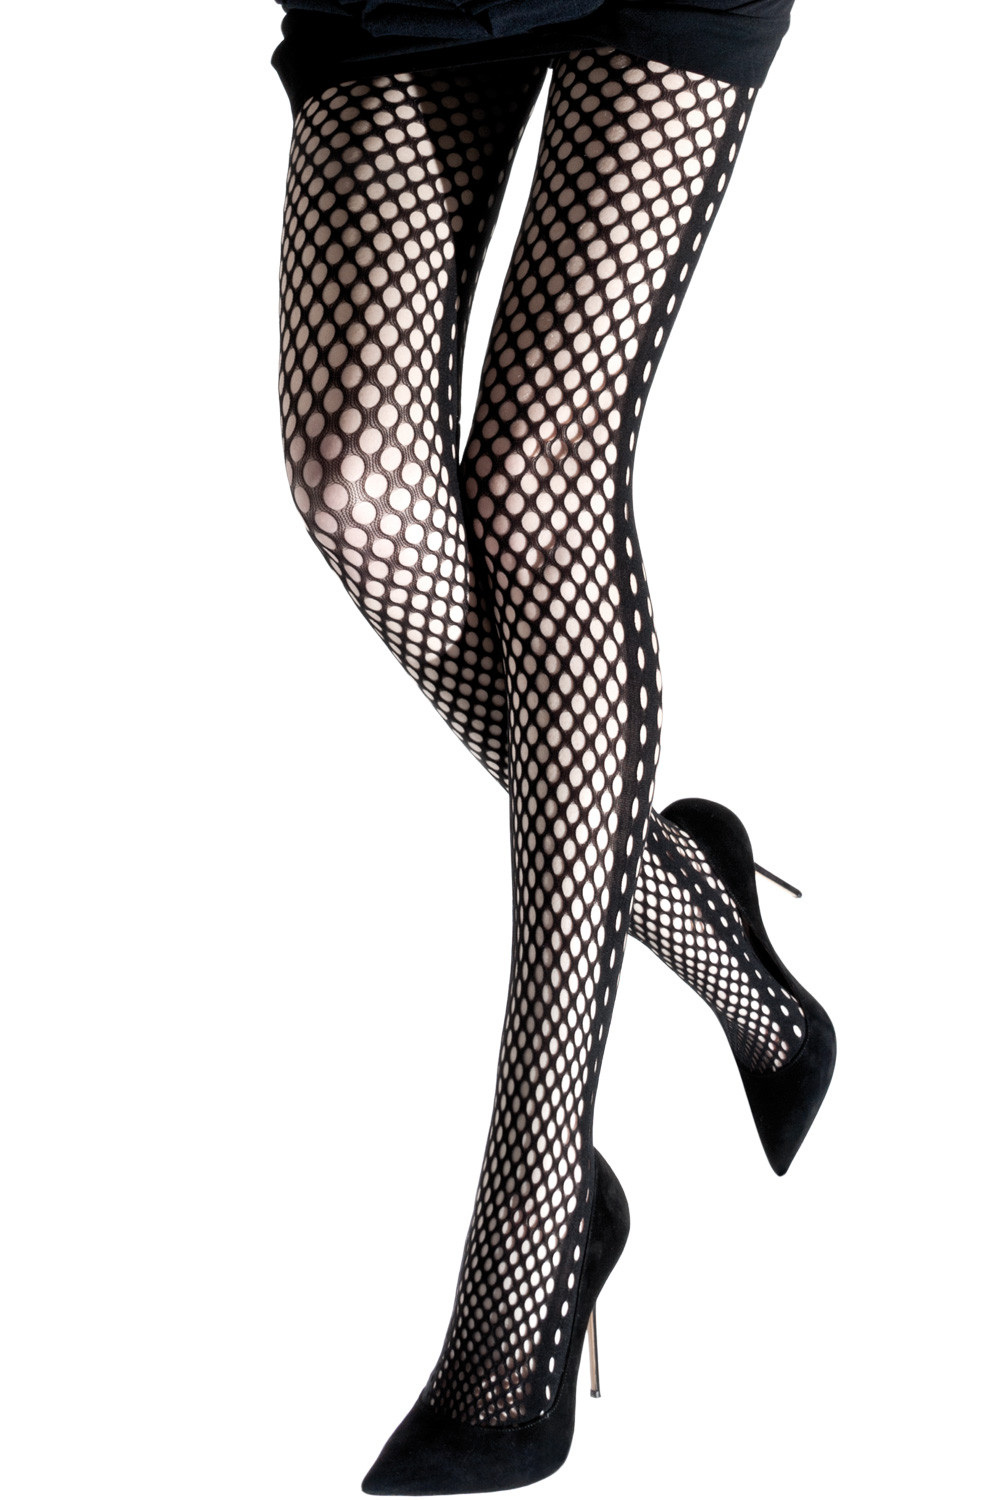 Spider Web Cobweb Pantyhose Tights - Fancy Dress VIP